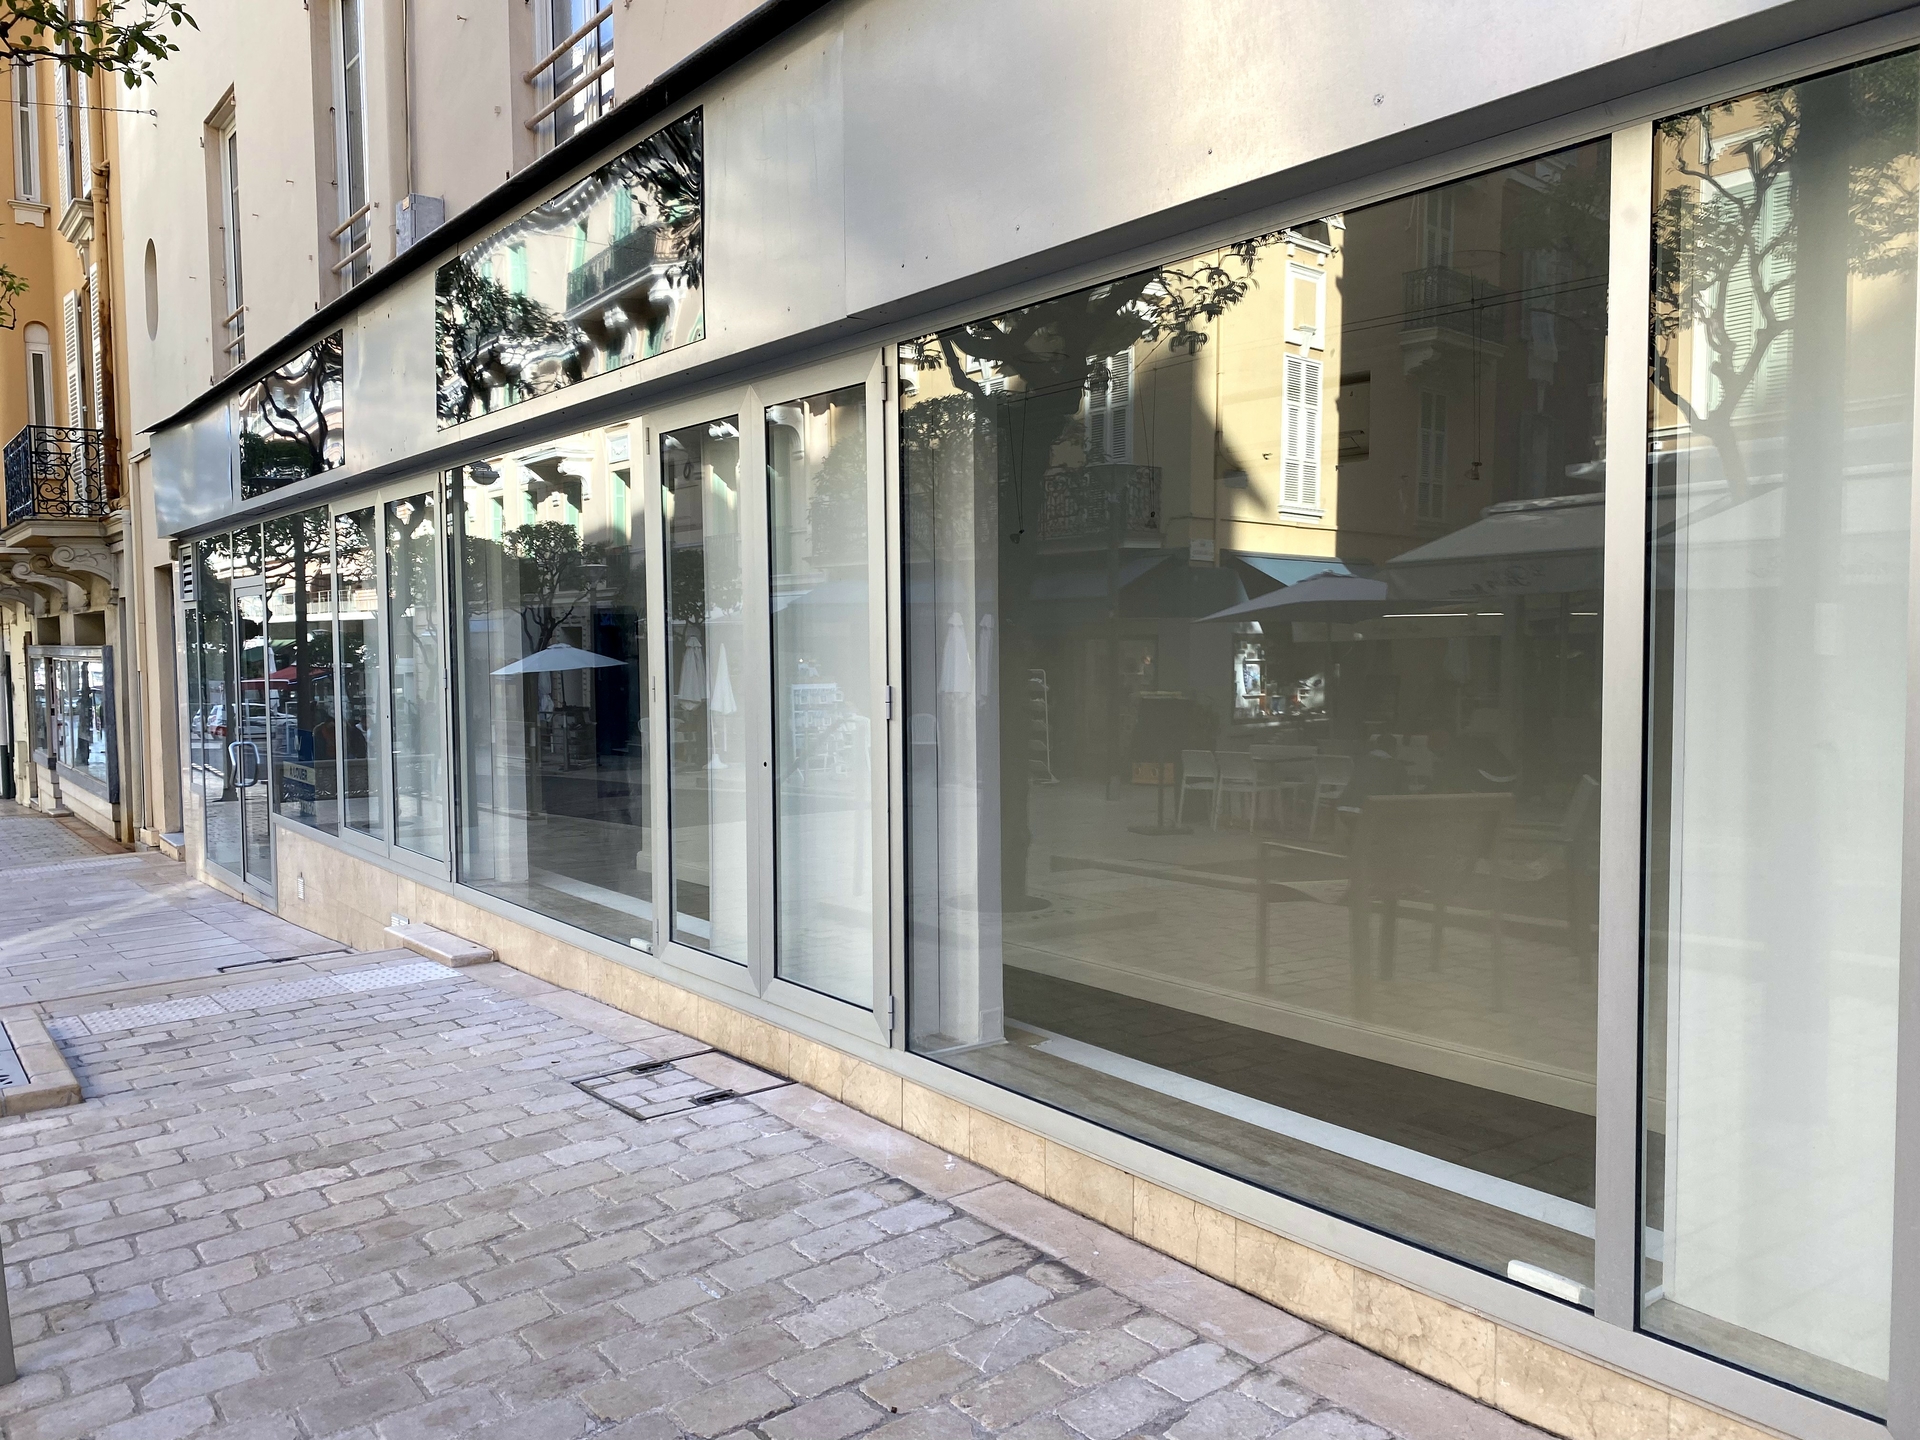 Monaco / Condamine / Local avec grande vitrine - Rentals of commercial spaces